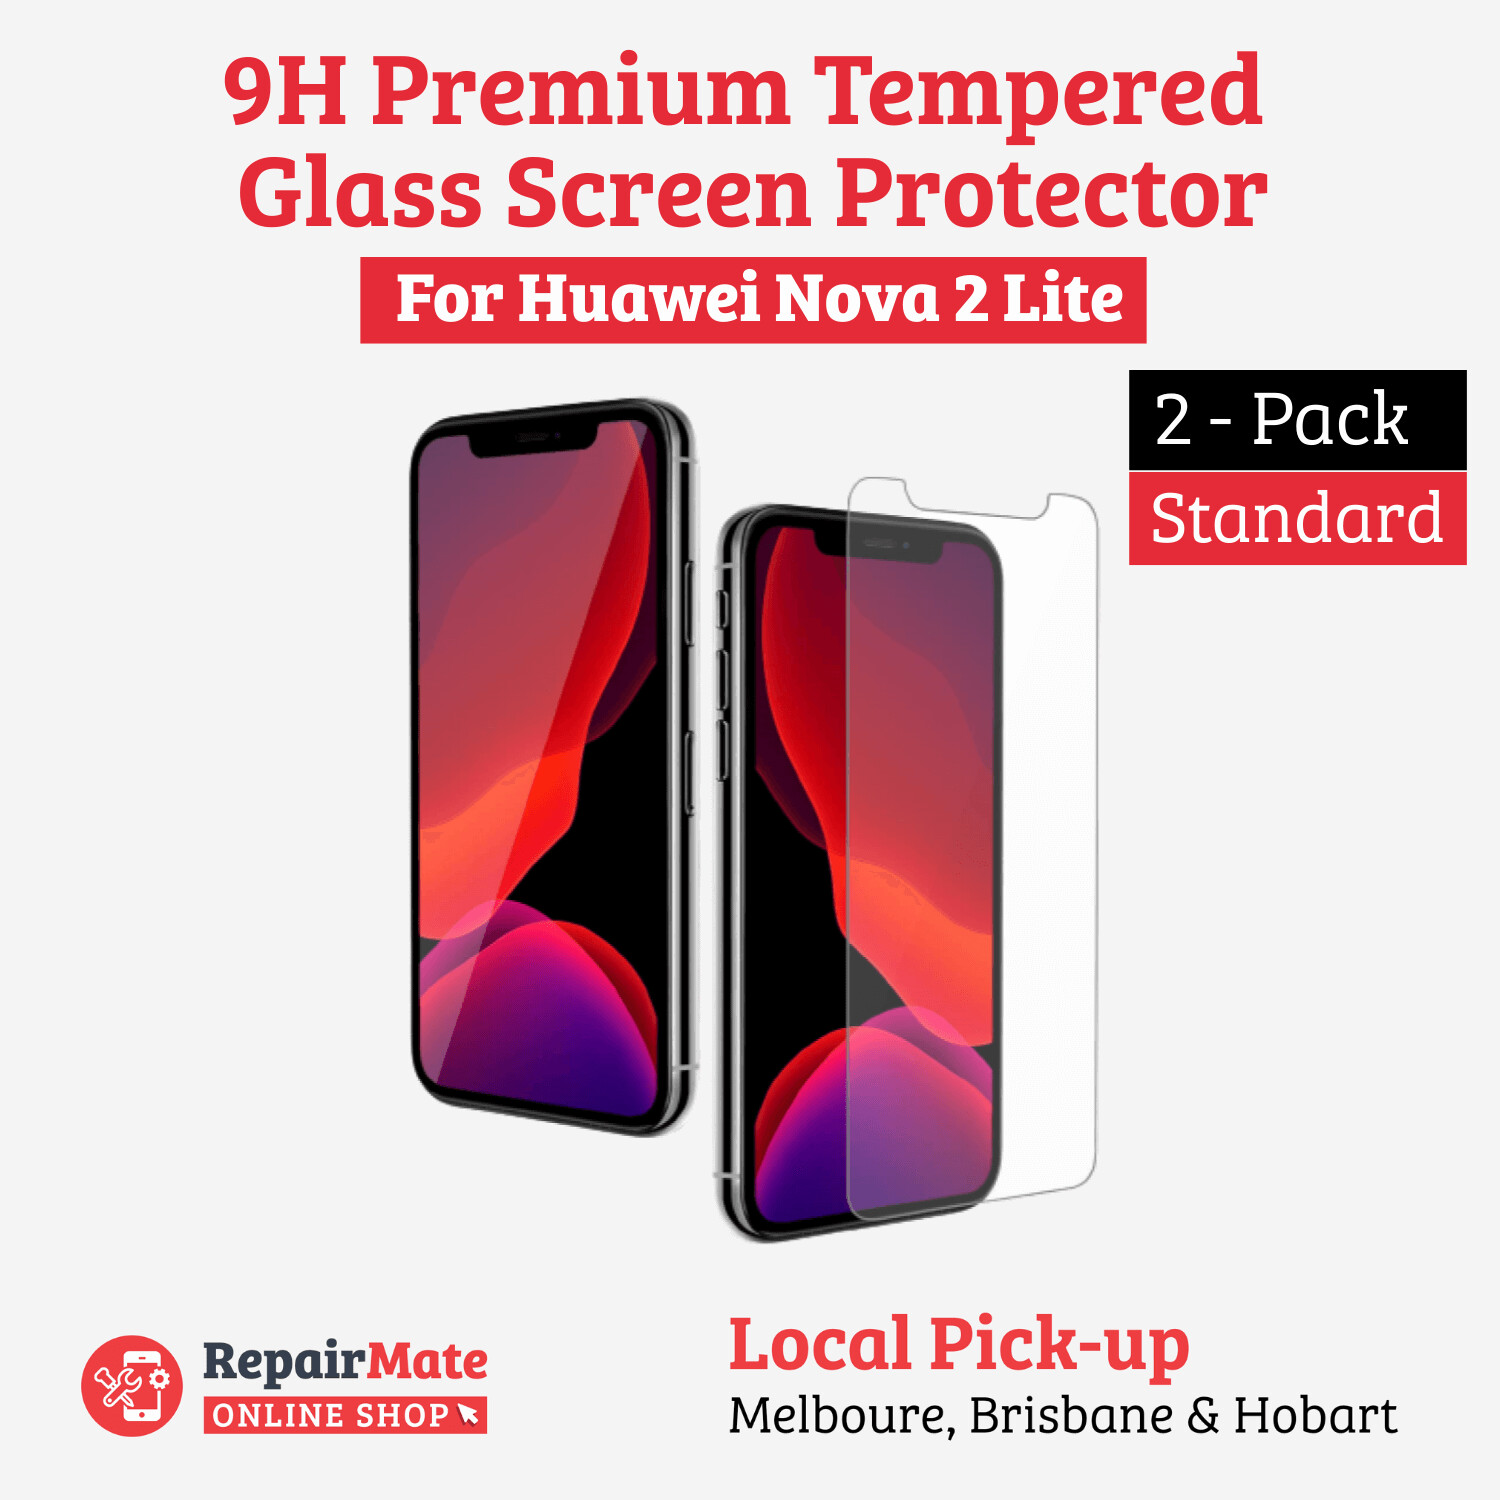 Huawei Nova 2 Lite 9H Premium Tempered Glass Screen Protector [2 Pack]